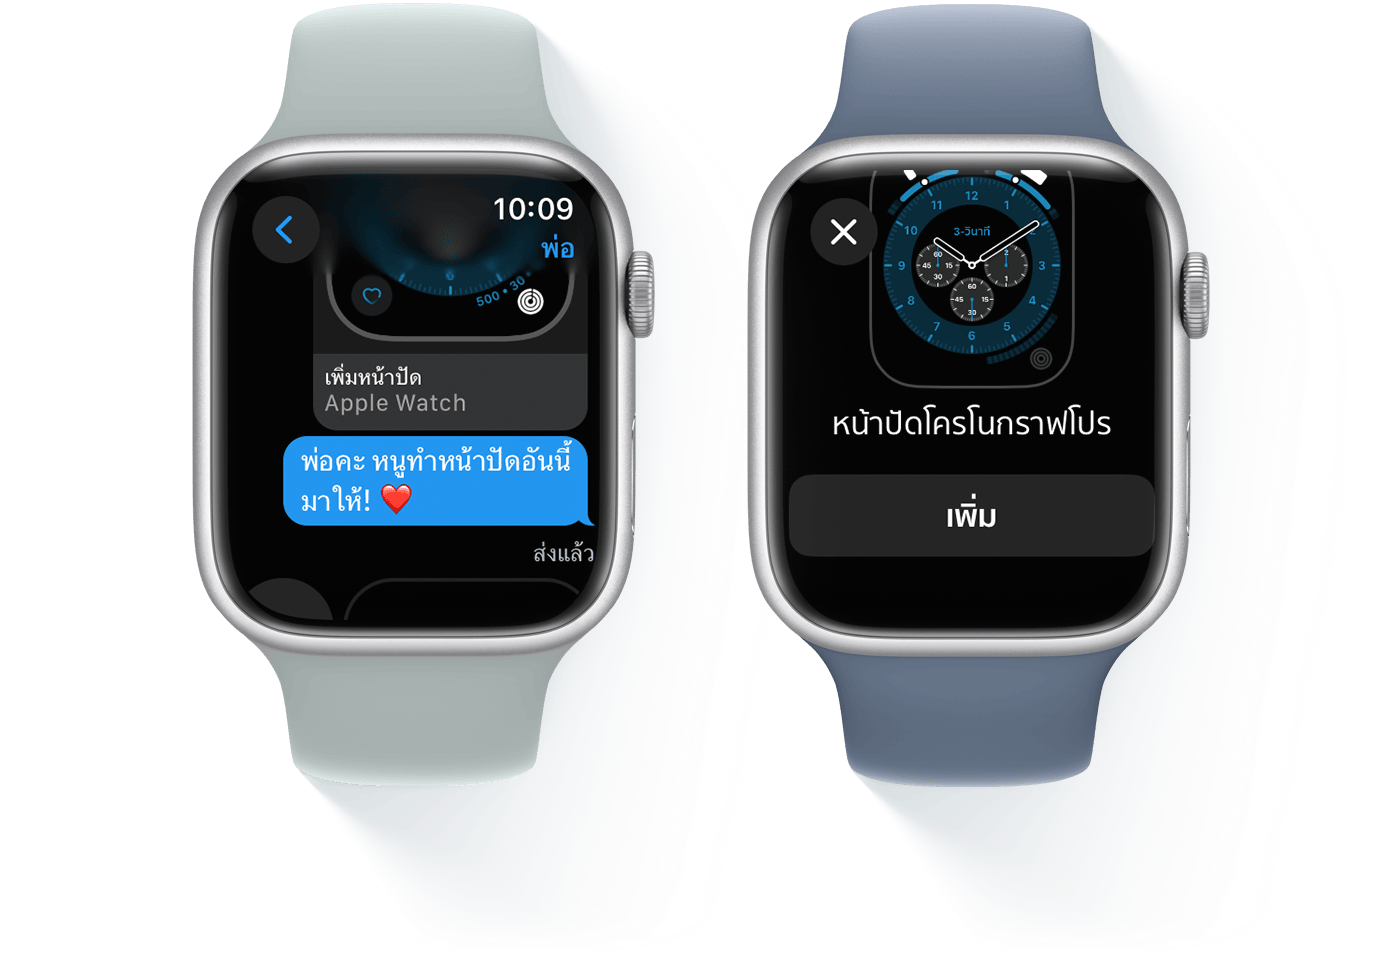 Apple Watch สองเรือน เรือนหนึ่งแสดงการสนทนาผ่านข้อความตัวอักษรและอีกเรือนหนึ่งแสดงหน้าปัดโครโนกราฟโปร